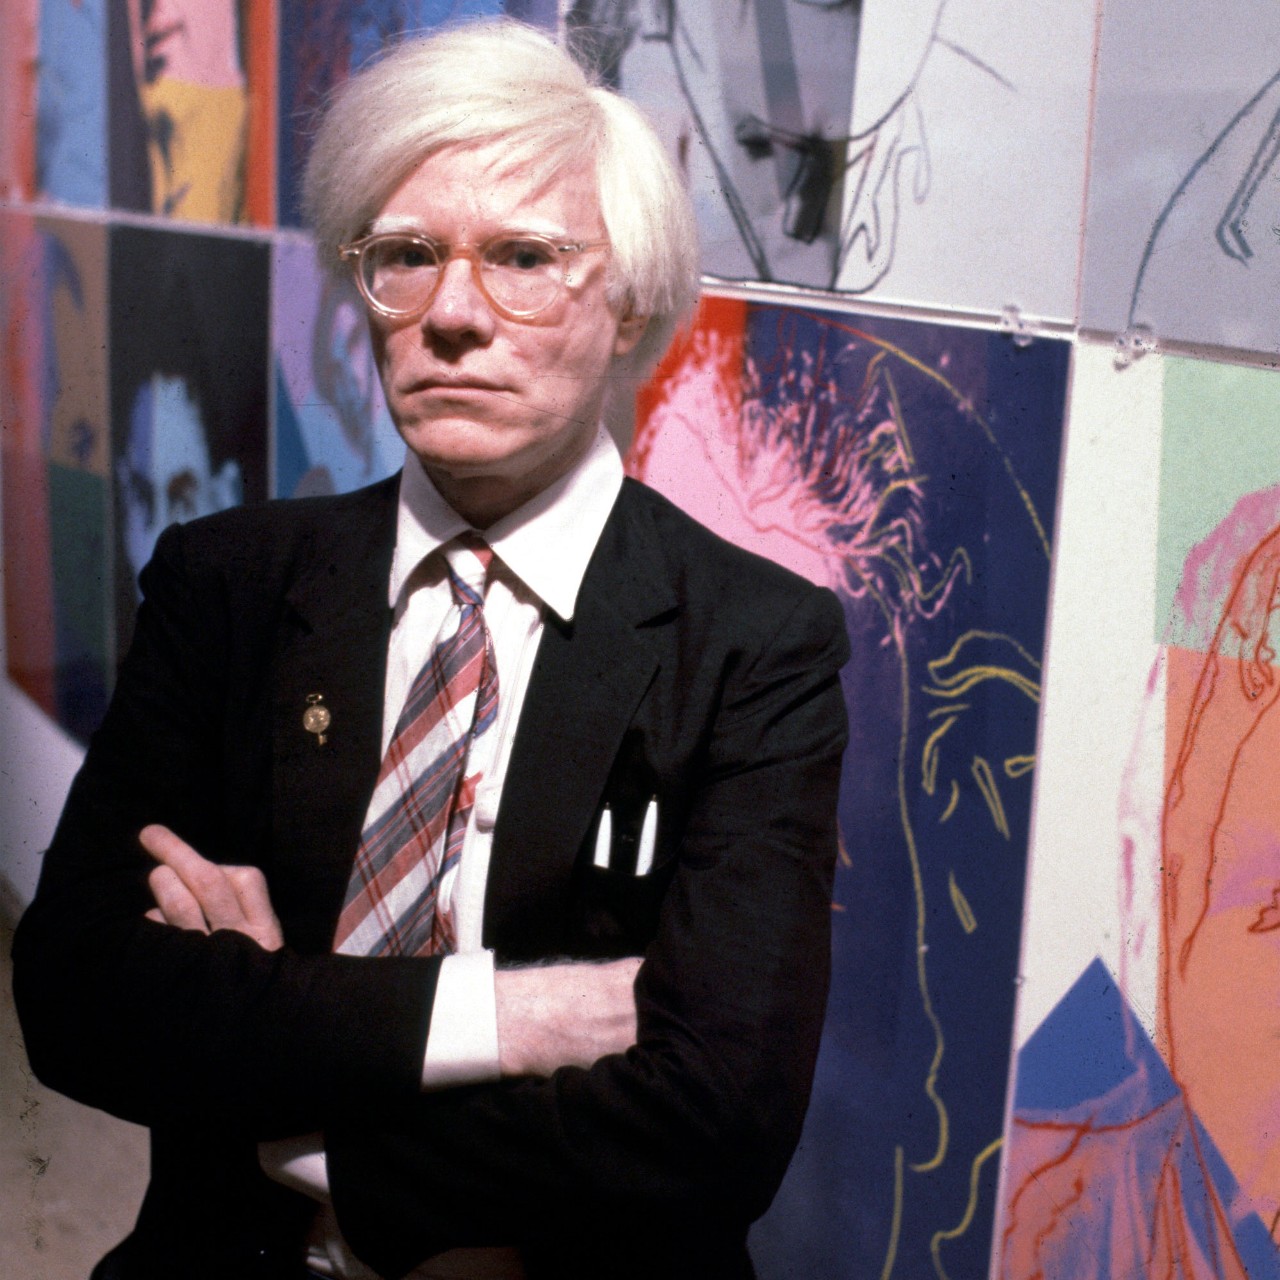 1. Andy Warhol